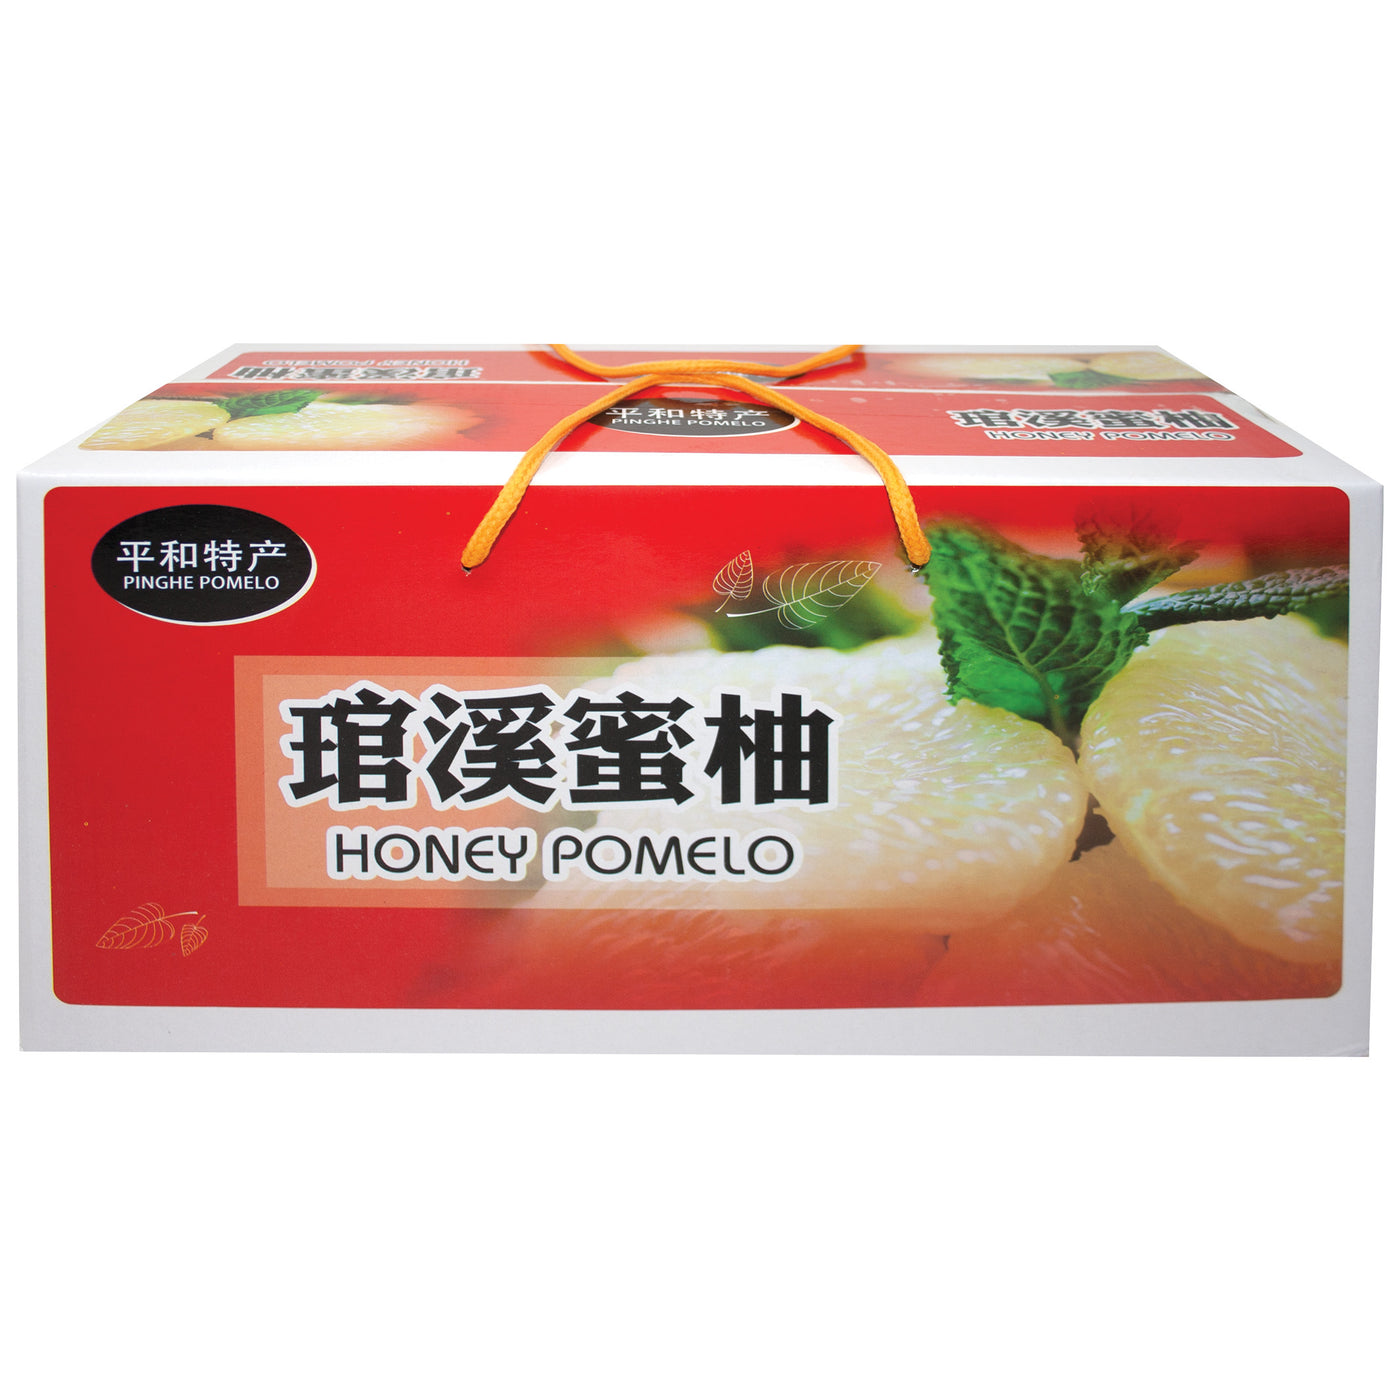 Honey Pomelos